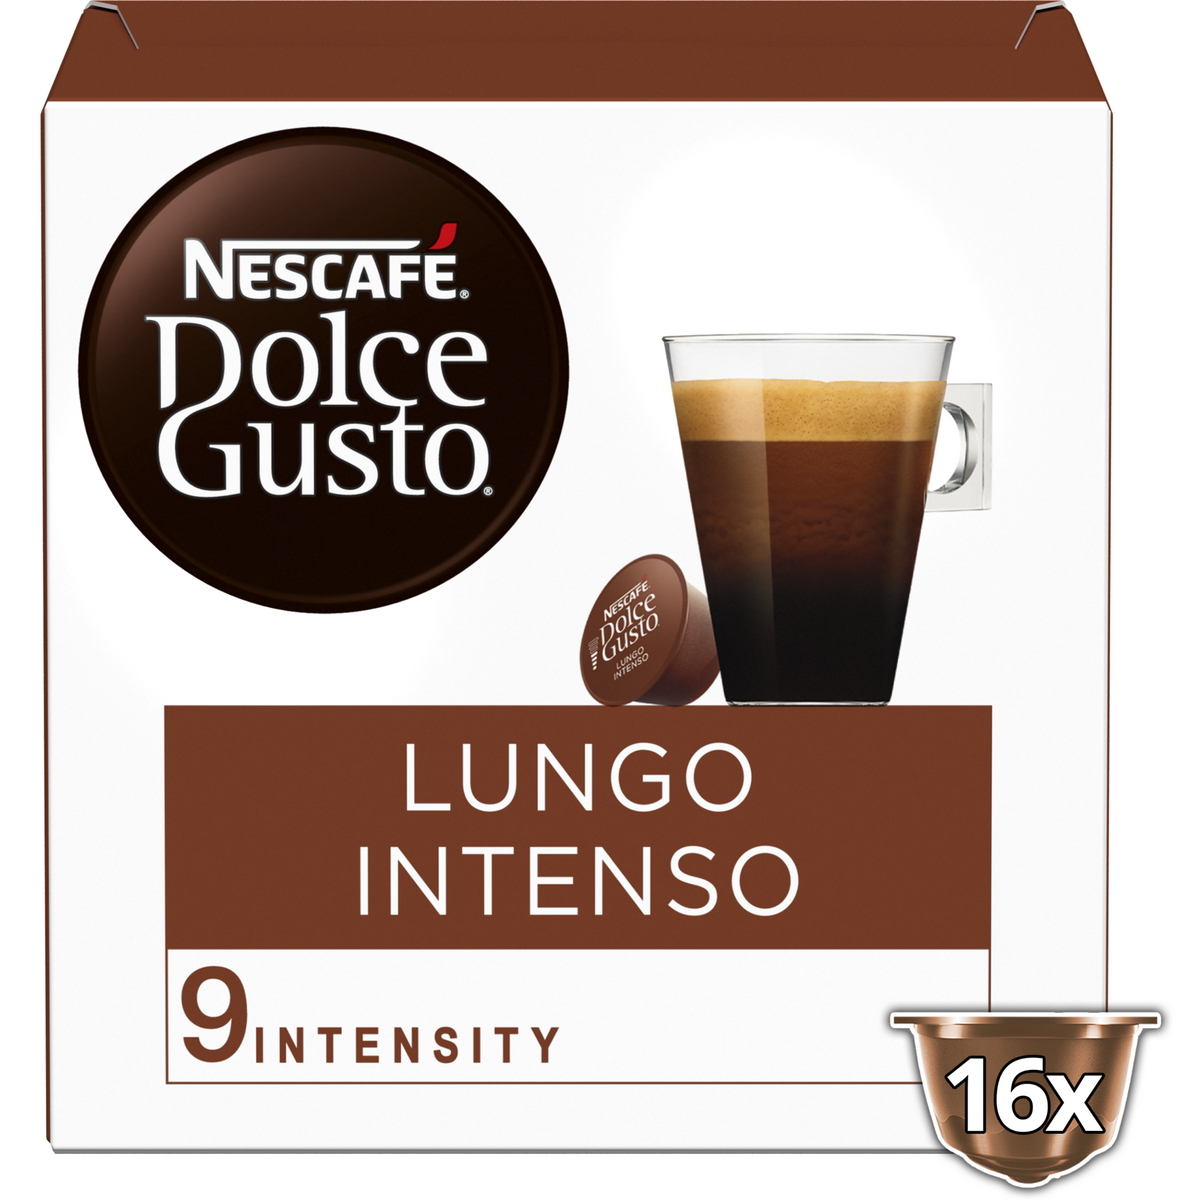 DOLCE GUSTO Capsules de café Lungo Intenso intensité 9 compatibles Dolce Gusto 16 capsules 144g